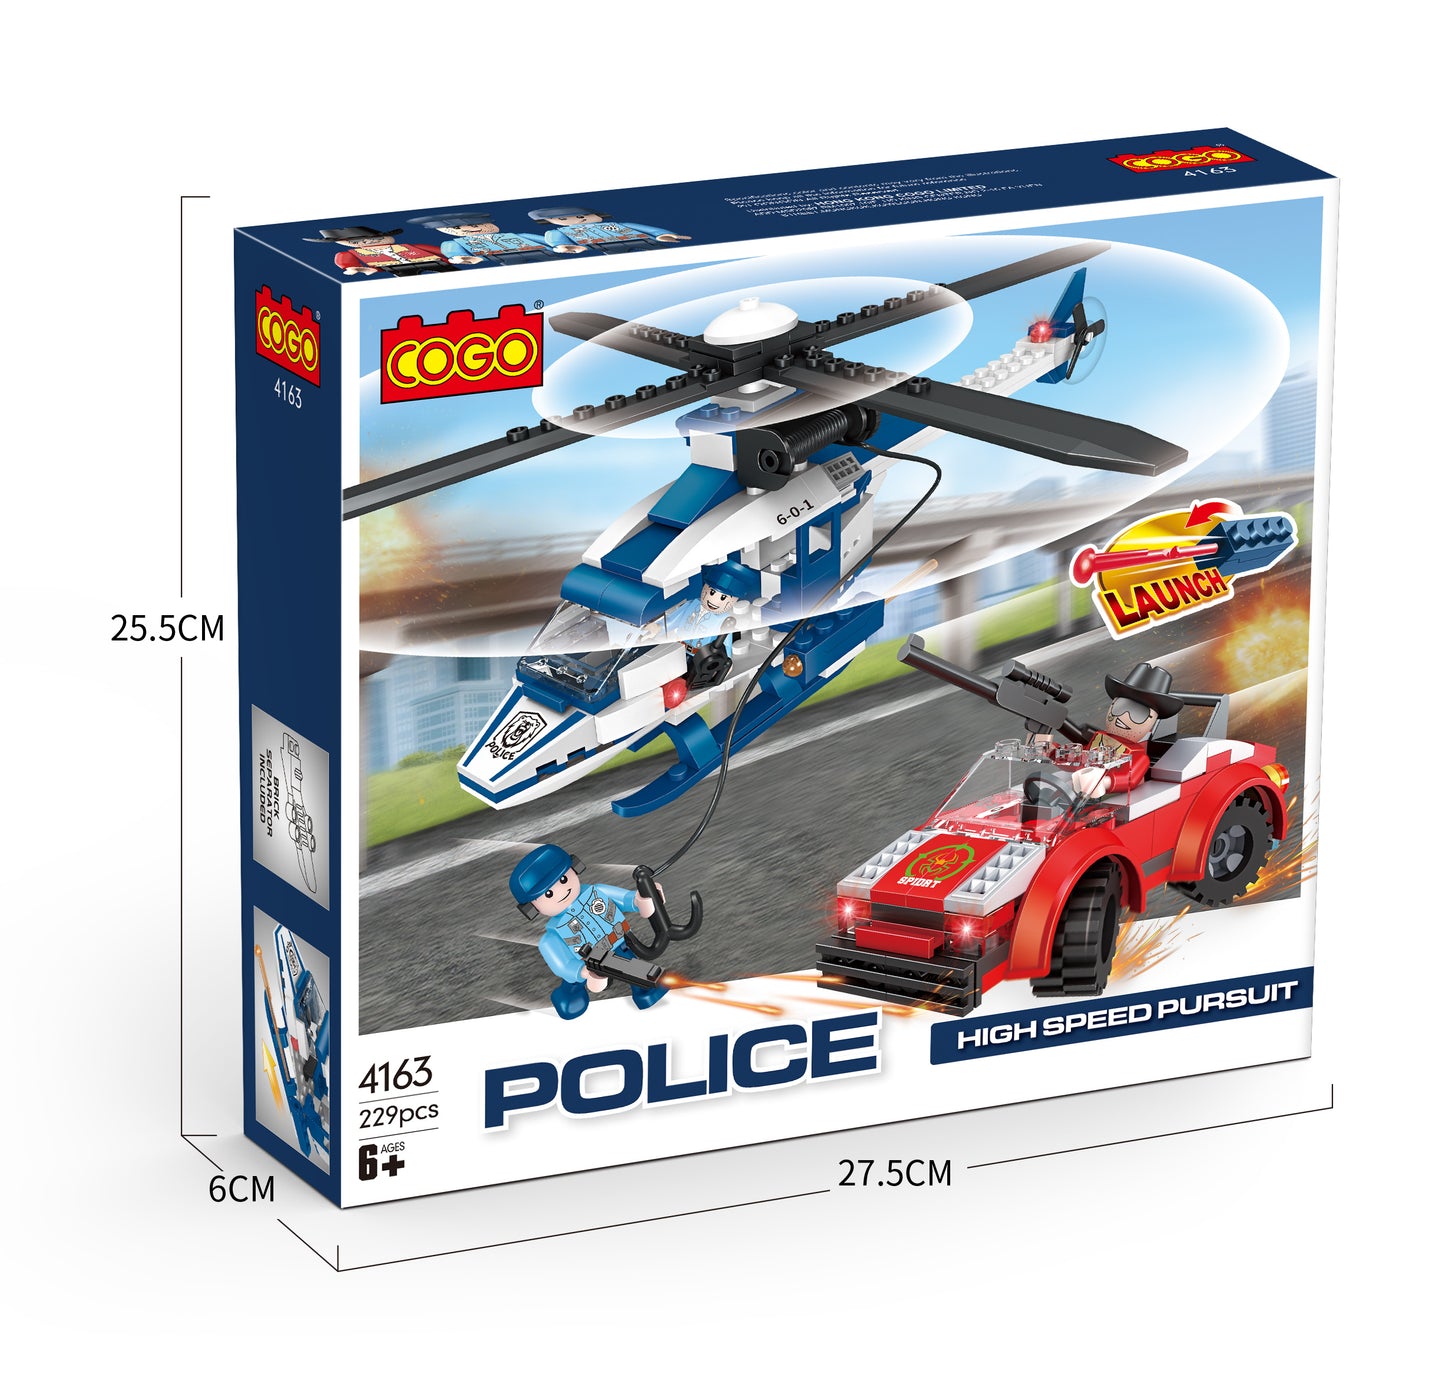 City Police High-Speed Pursuit